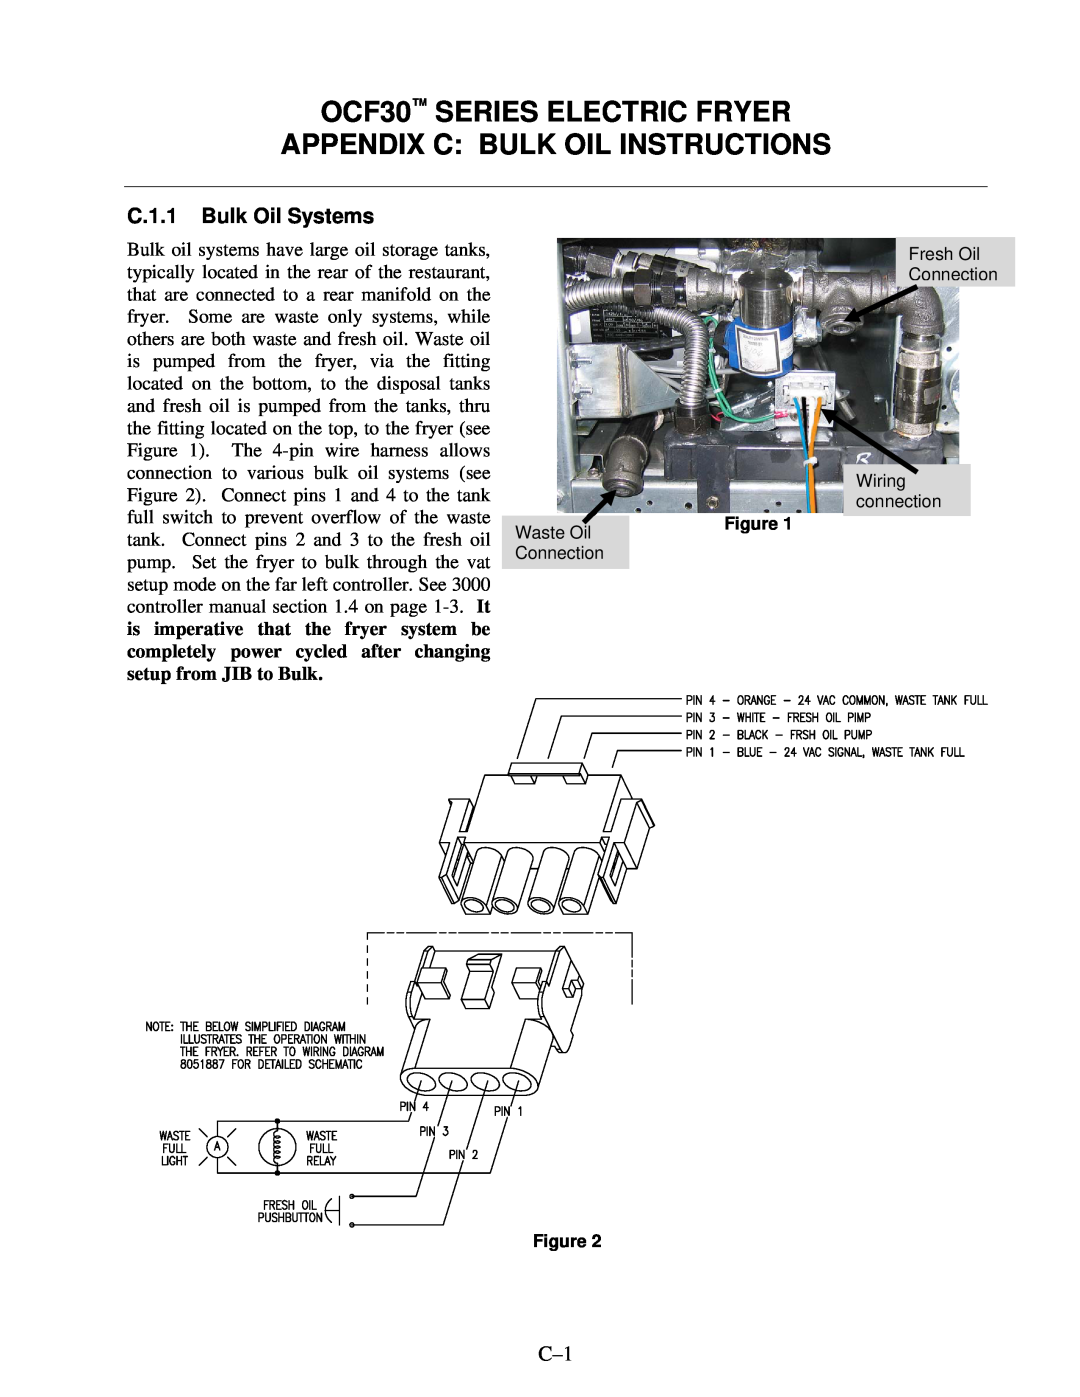 Frymaster operation manual Appendix C Bulk Oil Instructions, OCF30 SERIES ELECTRIC FRYER, C.1.1 Bulk Oil Systems 